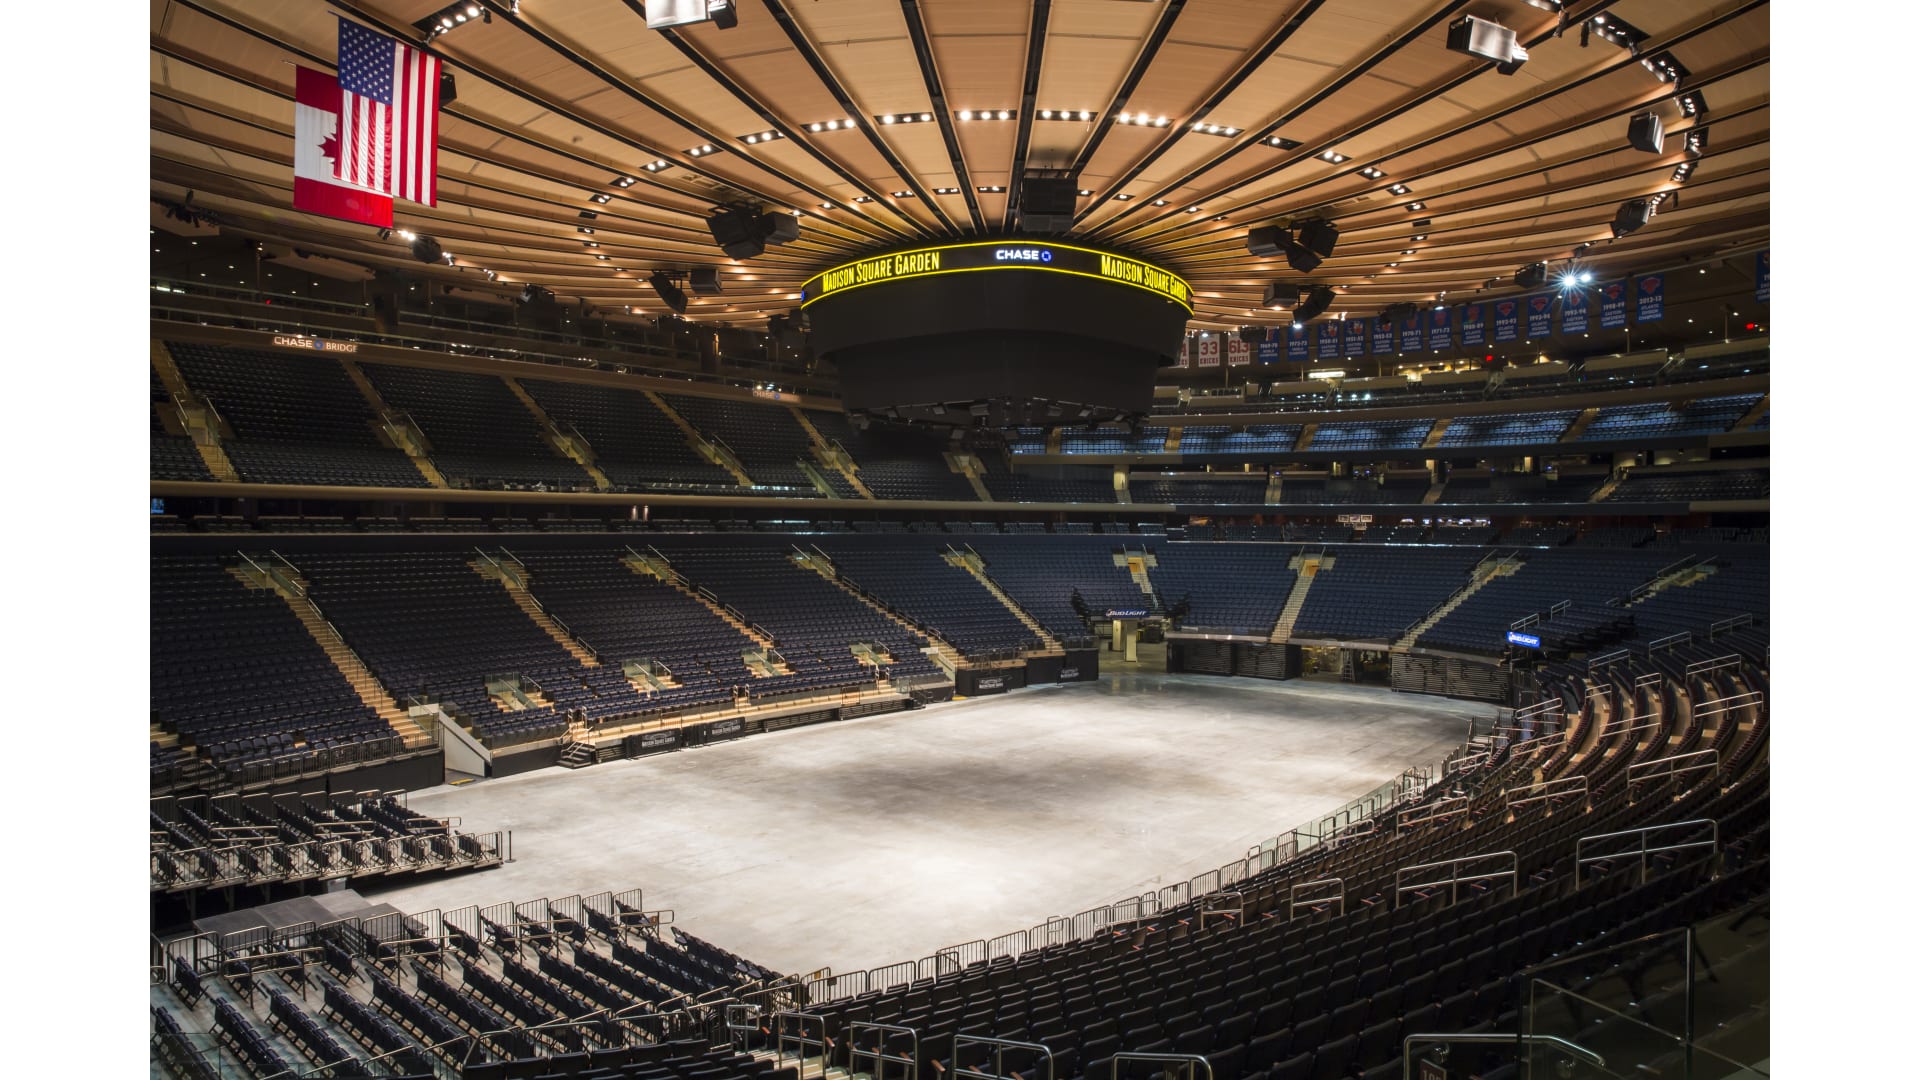 New York Rangers Third Collection – Shop Madison Square Garden